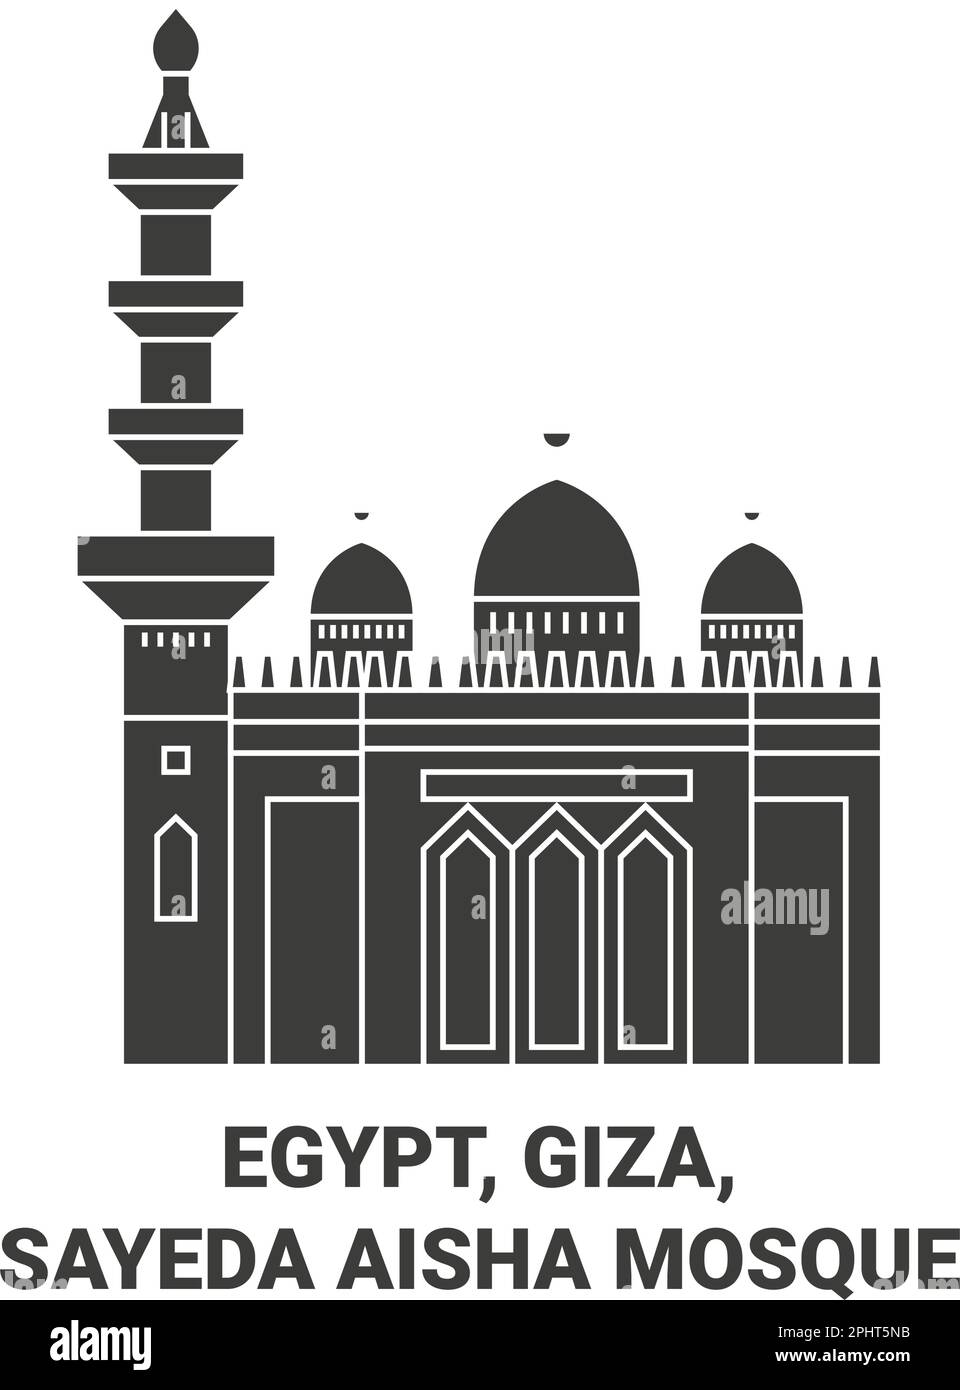 Egypt, Giza, Sayeda Aisha Mosque travel landmark vector illustration Stock Vector